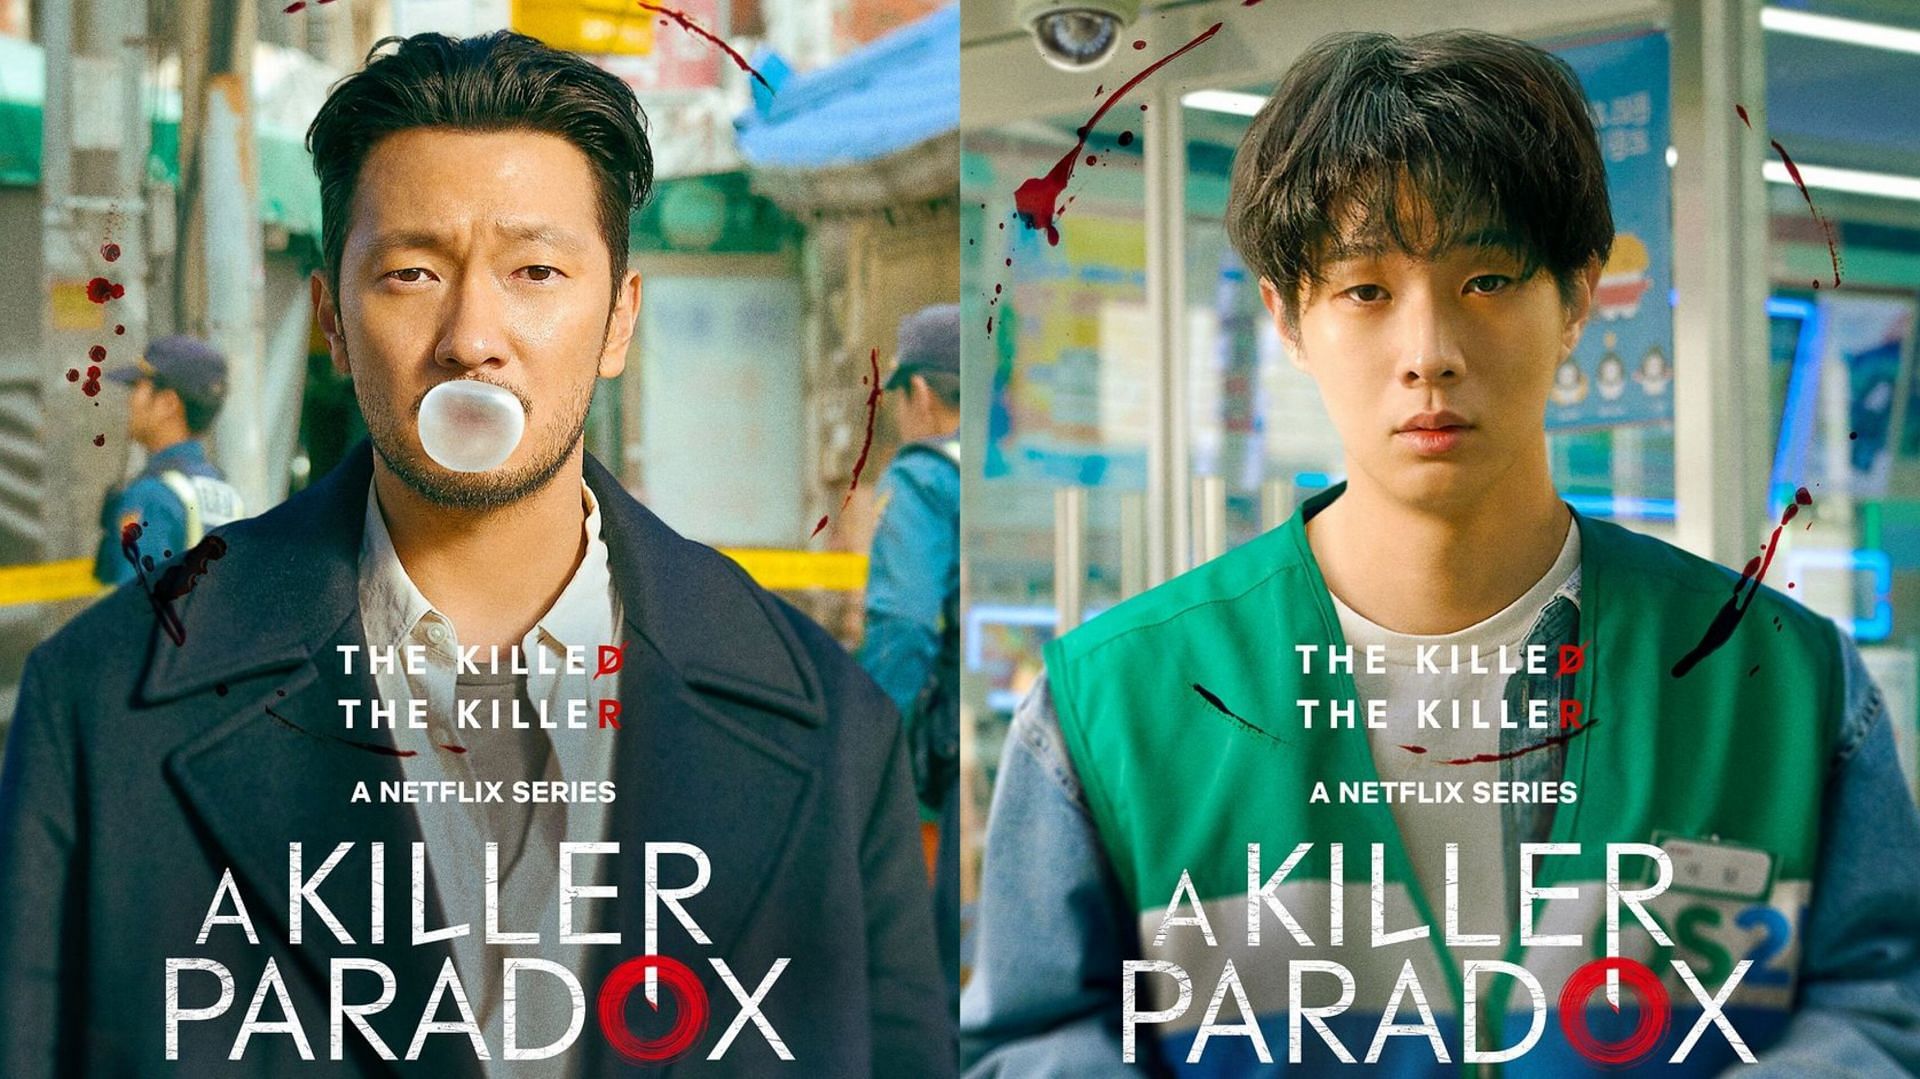 Featuring A Killer Paradox cast (Image via Netflix)